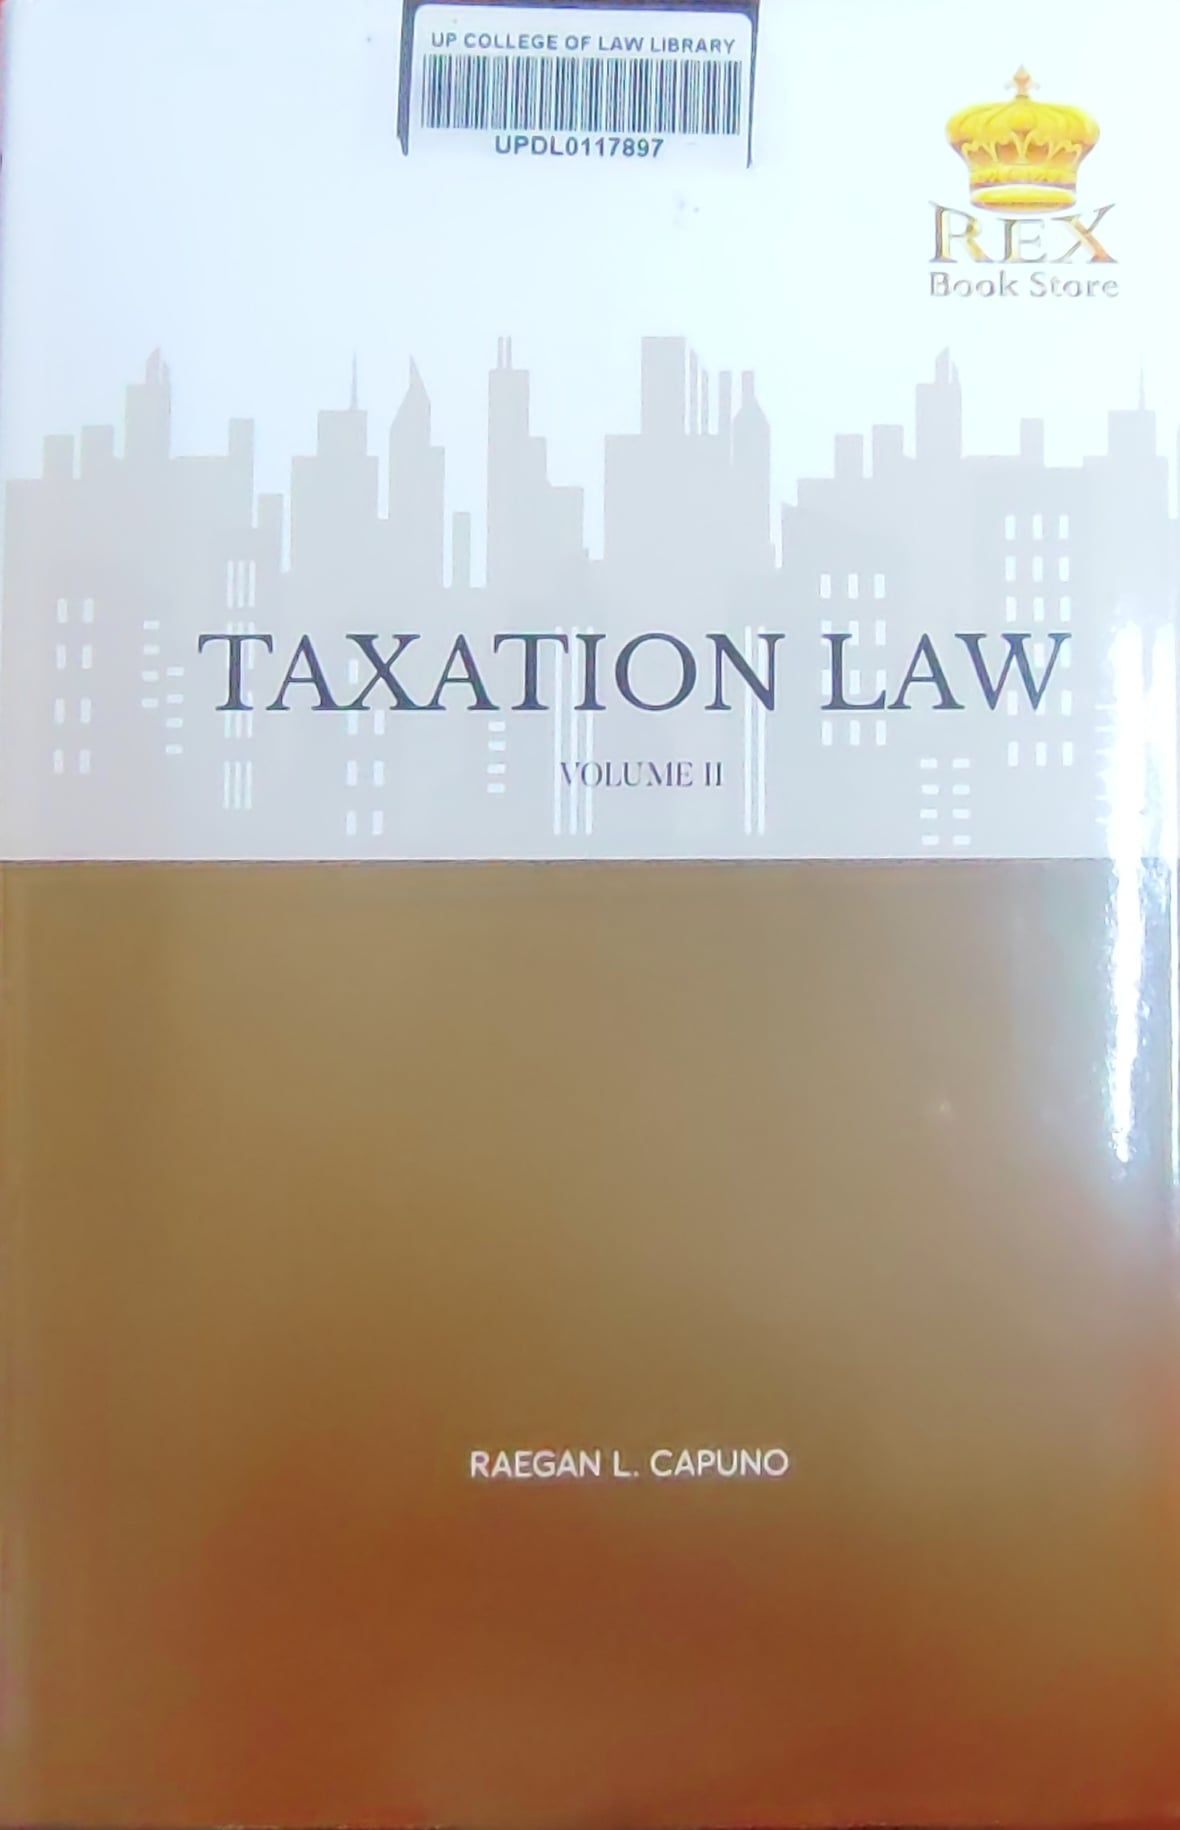 Taxation law